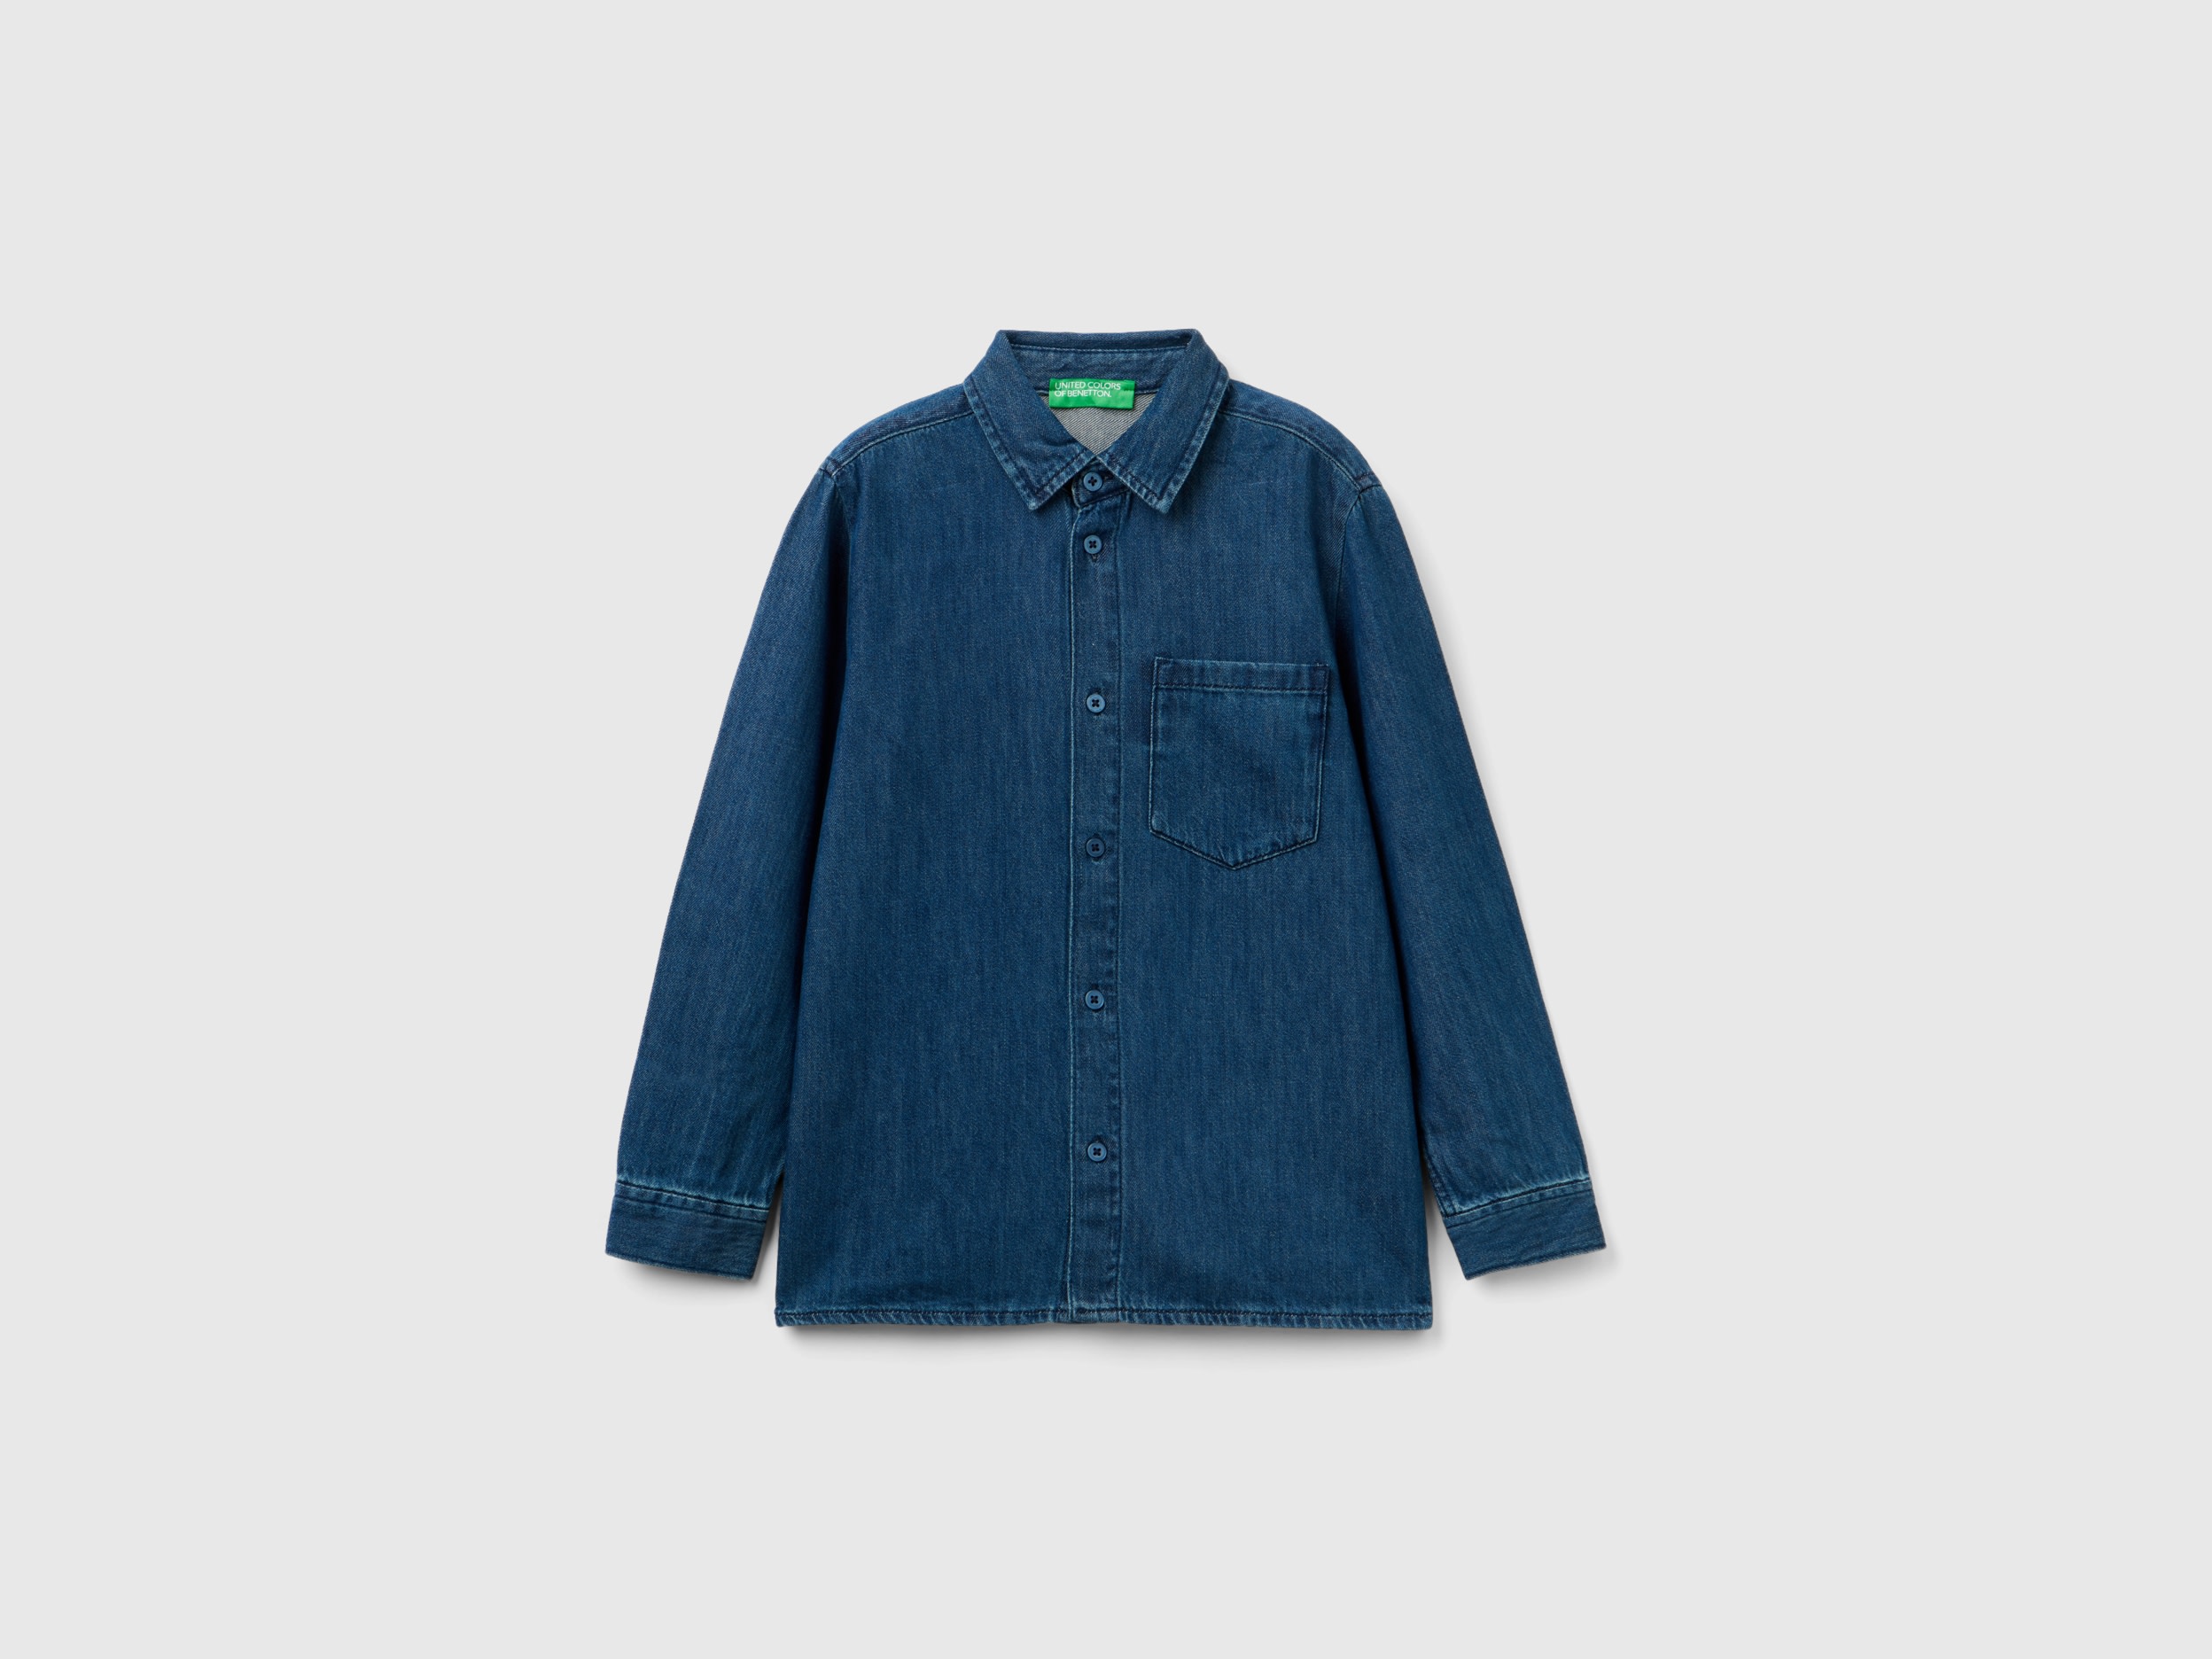 Benetton, Jean Shirt With Pocket, size M, Blue, Kids